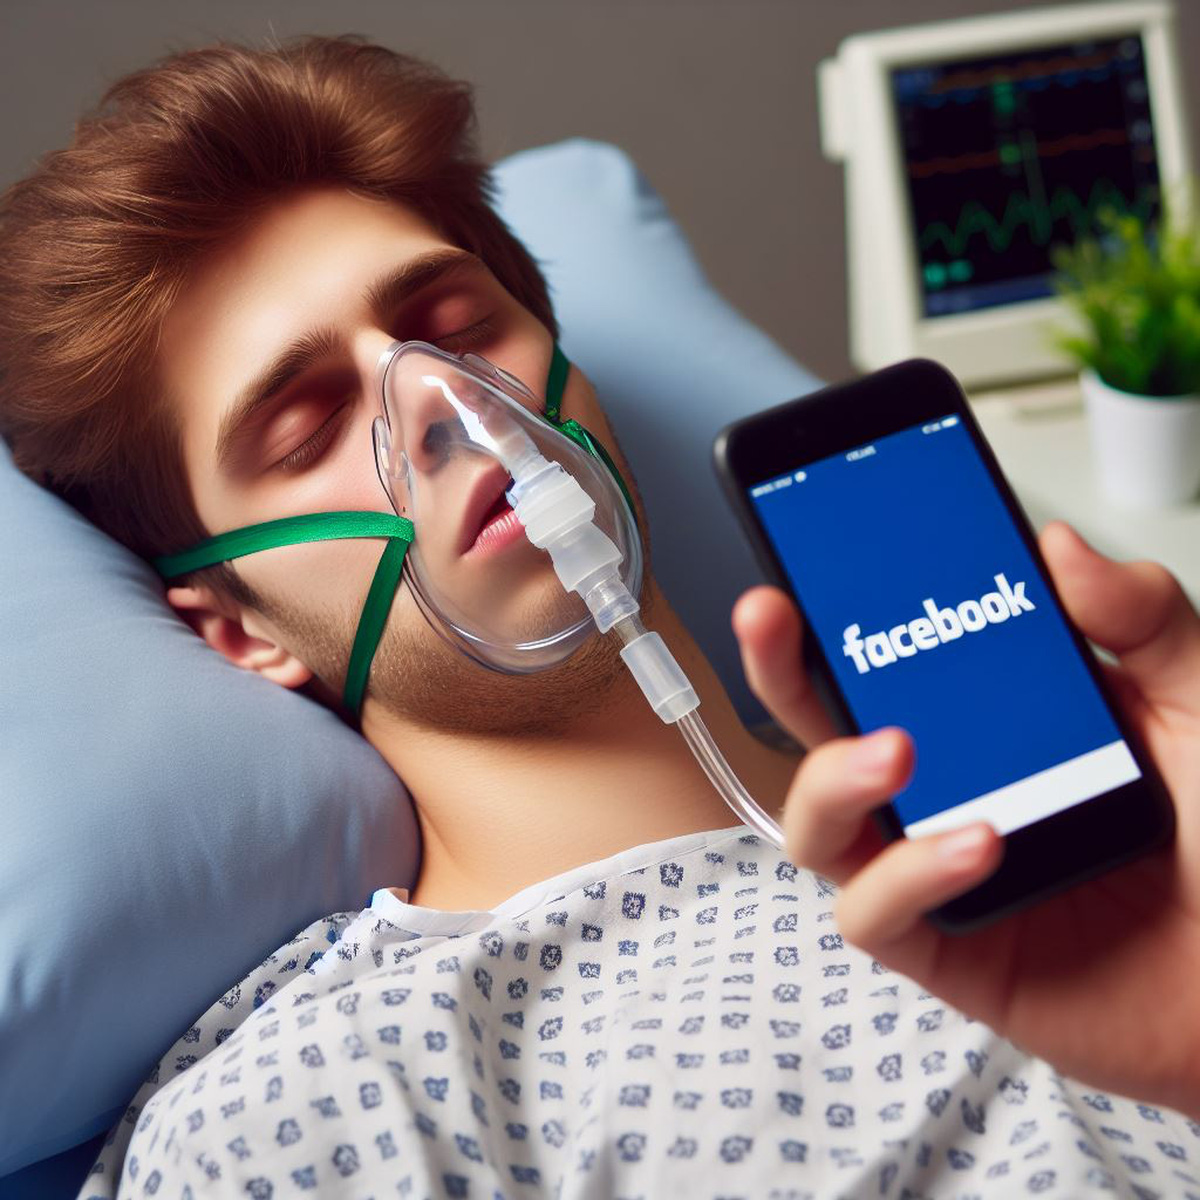 Facebook thở oxy hay người dùng thở oxy?